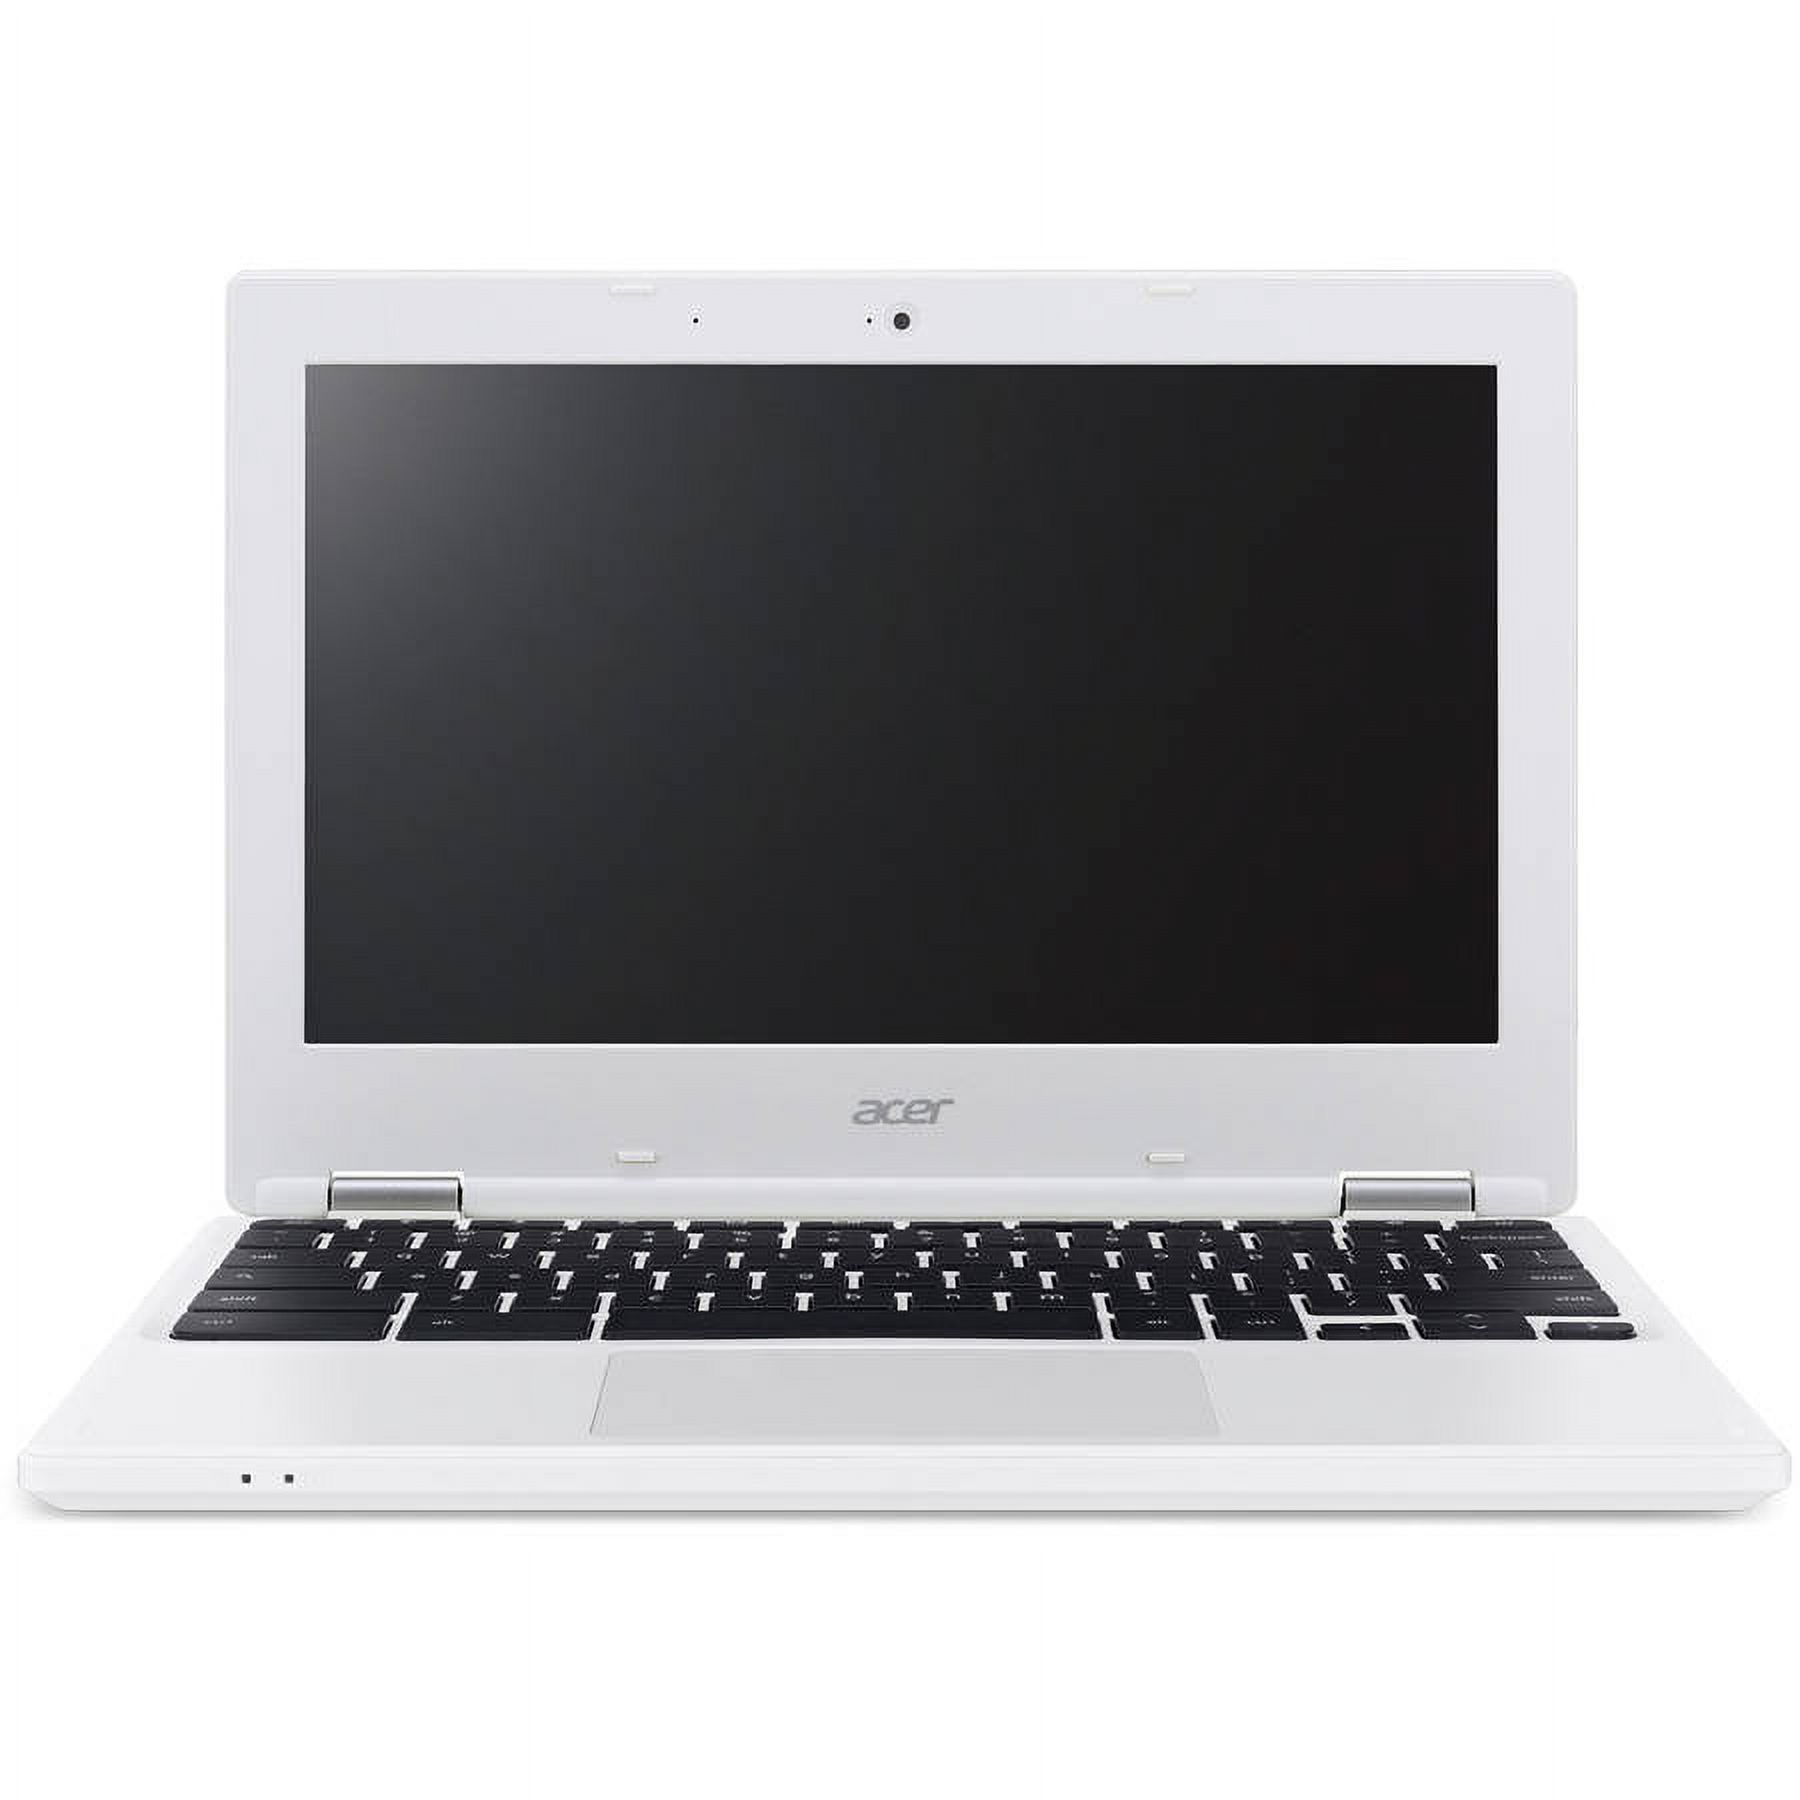 Acer Denim White 11.6" CB3-131-C3SZ Chromebook 11 PC with Intel Celeron N2840 Dual-Core Processor, 2GB Memory, 16GB Flash Storage and Google Chrome - image 3 of 8